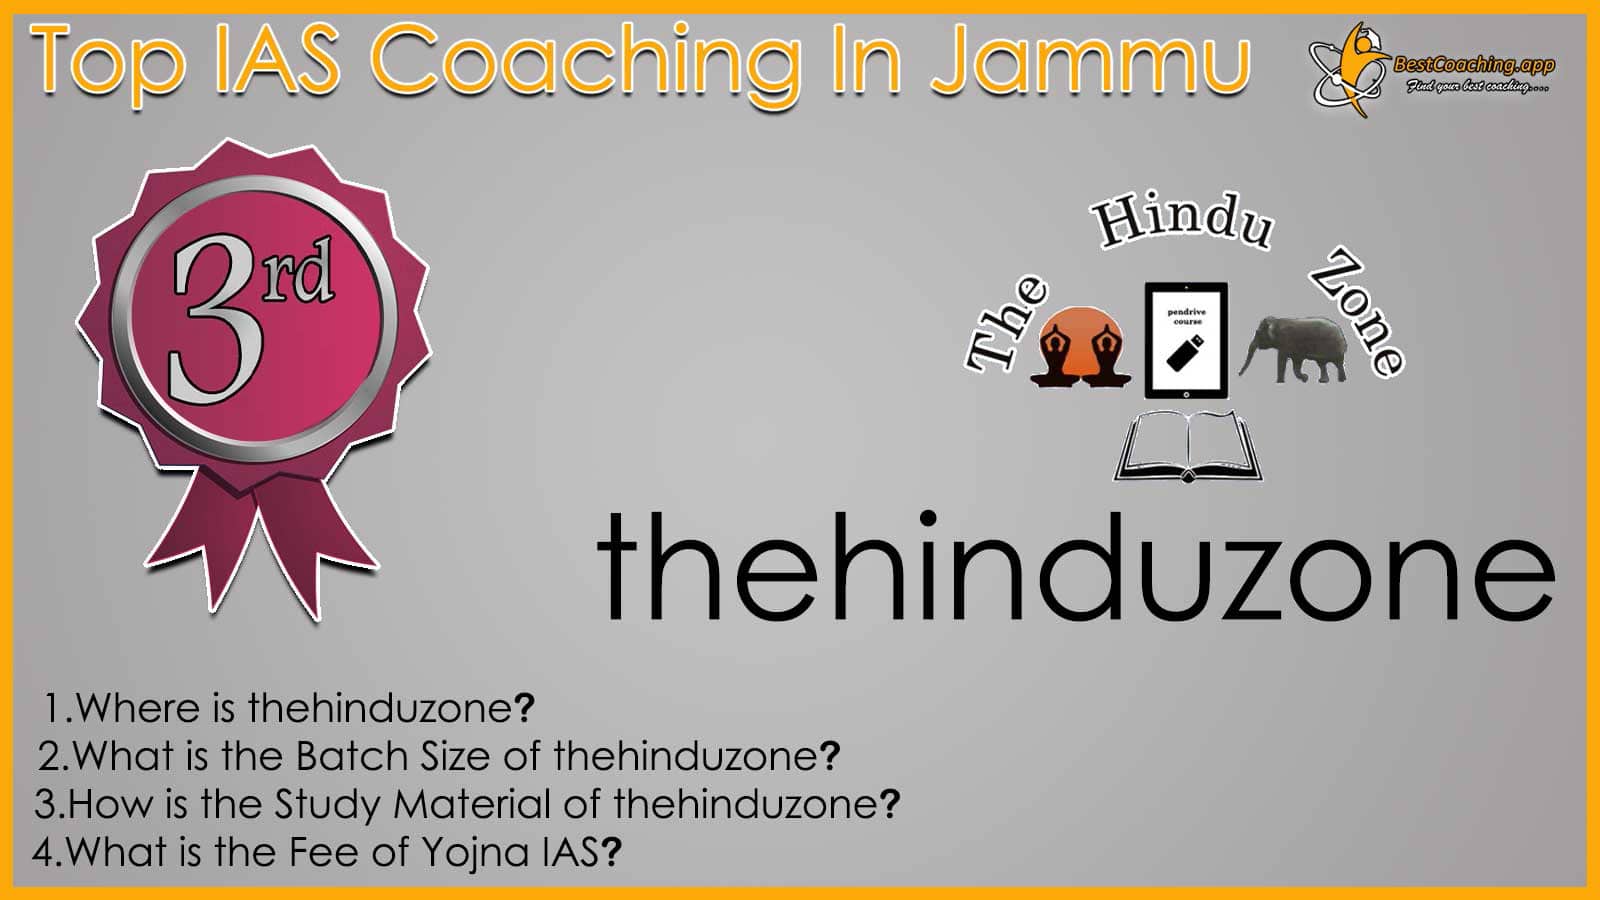 Rank 3 Best IAS Coaching in Jammu